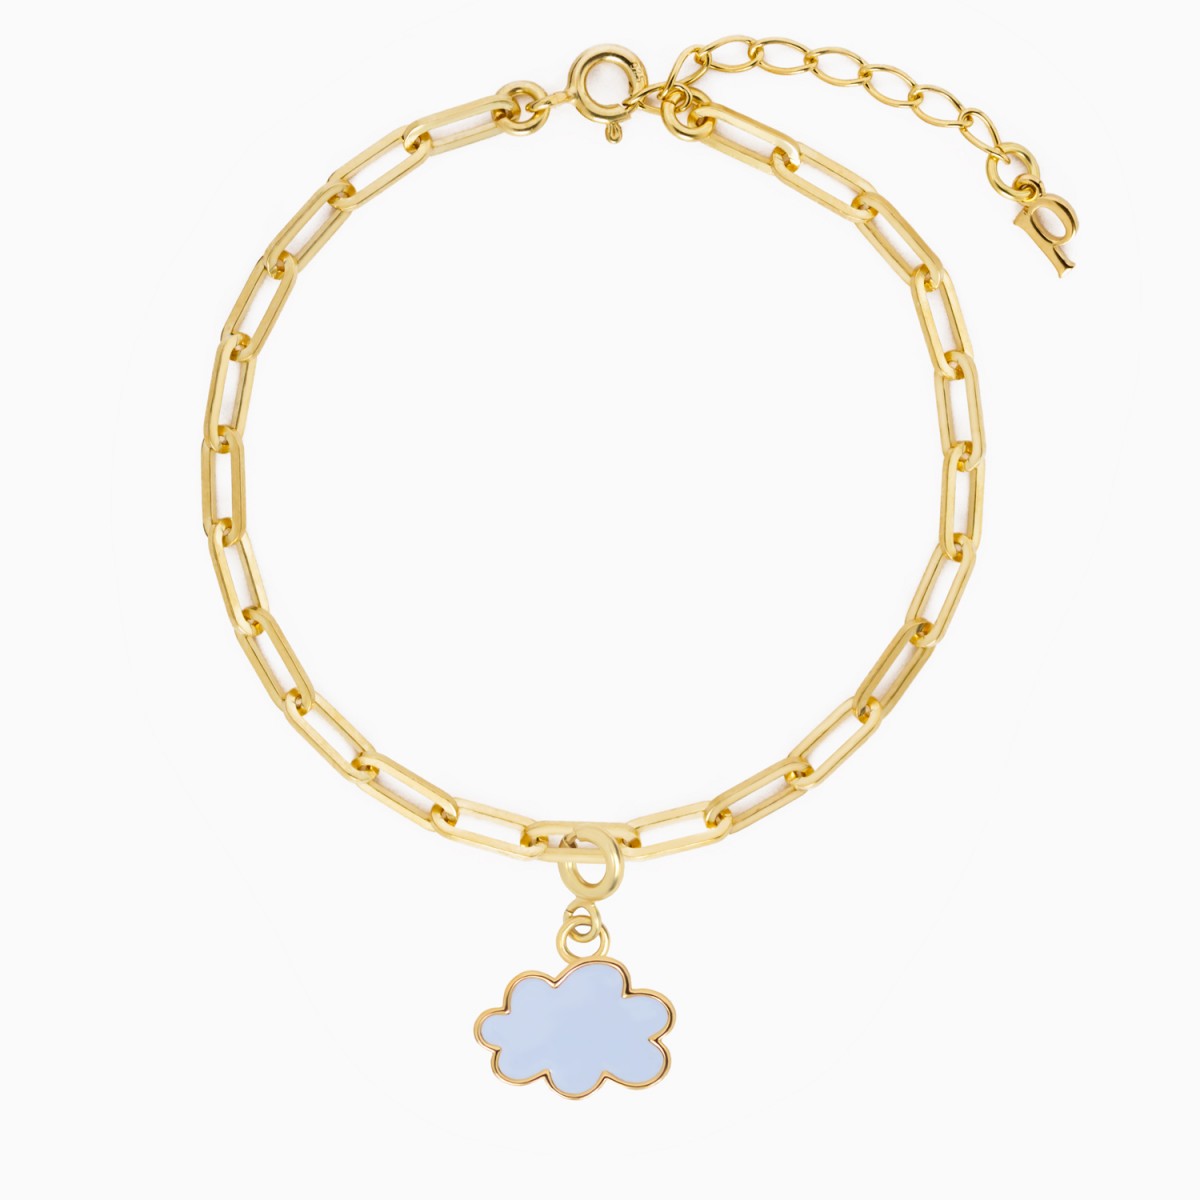 Bettelarmband mit Wolken Charm Anhänger aus Gold Vermeil  | Paeoni Colors